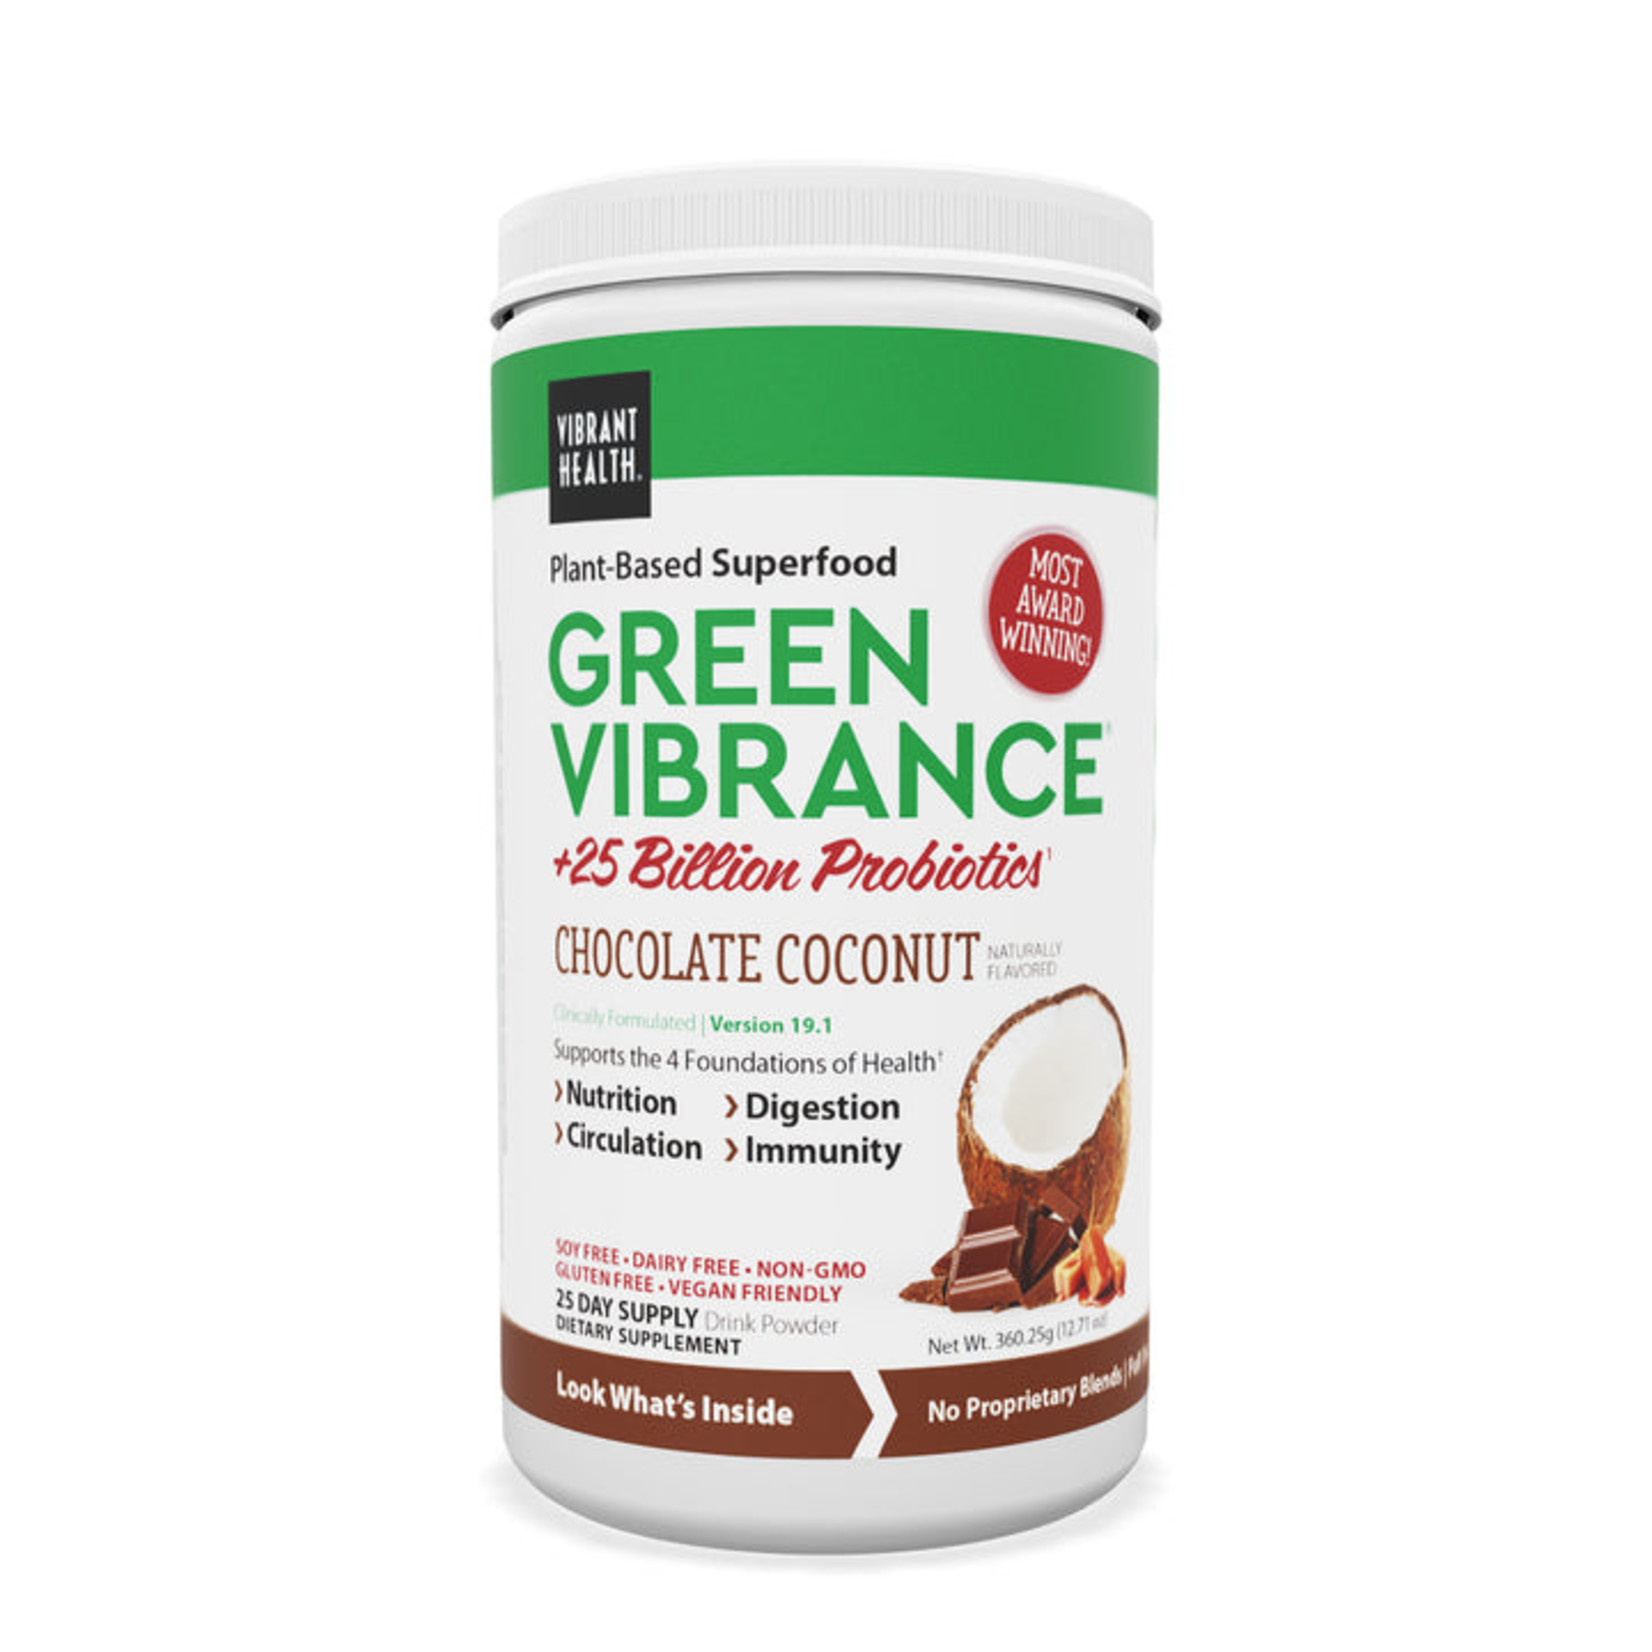 Vibrant Health Vibrant Health - Green Vibrance Chocolate Coconut - 12.71 oz